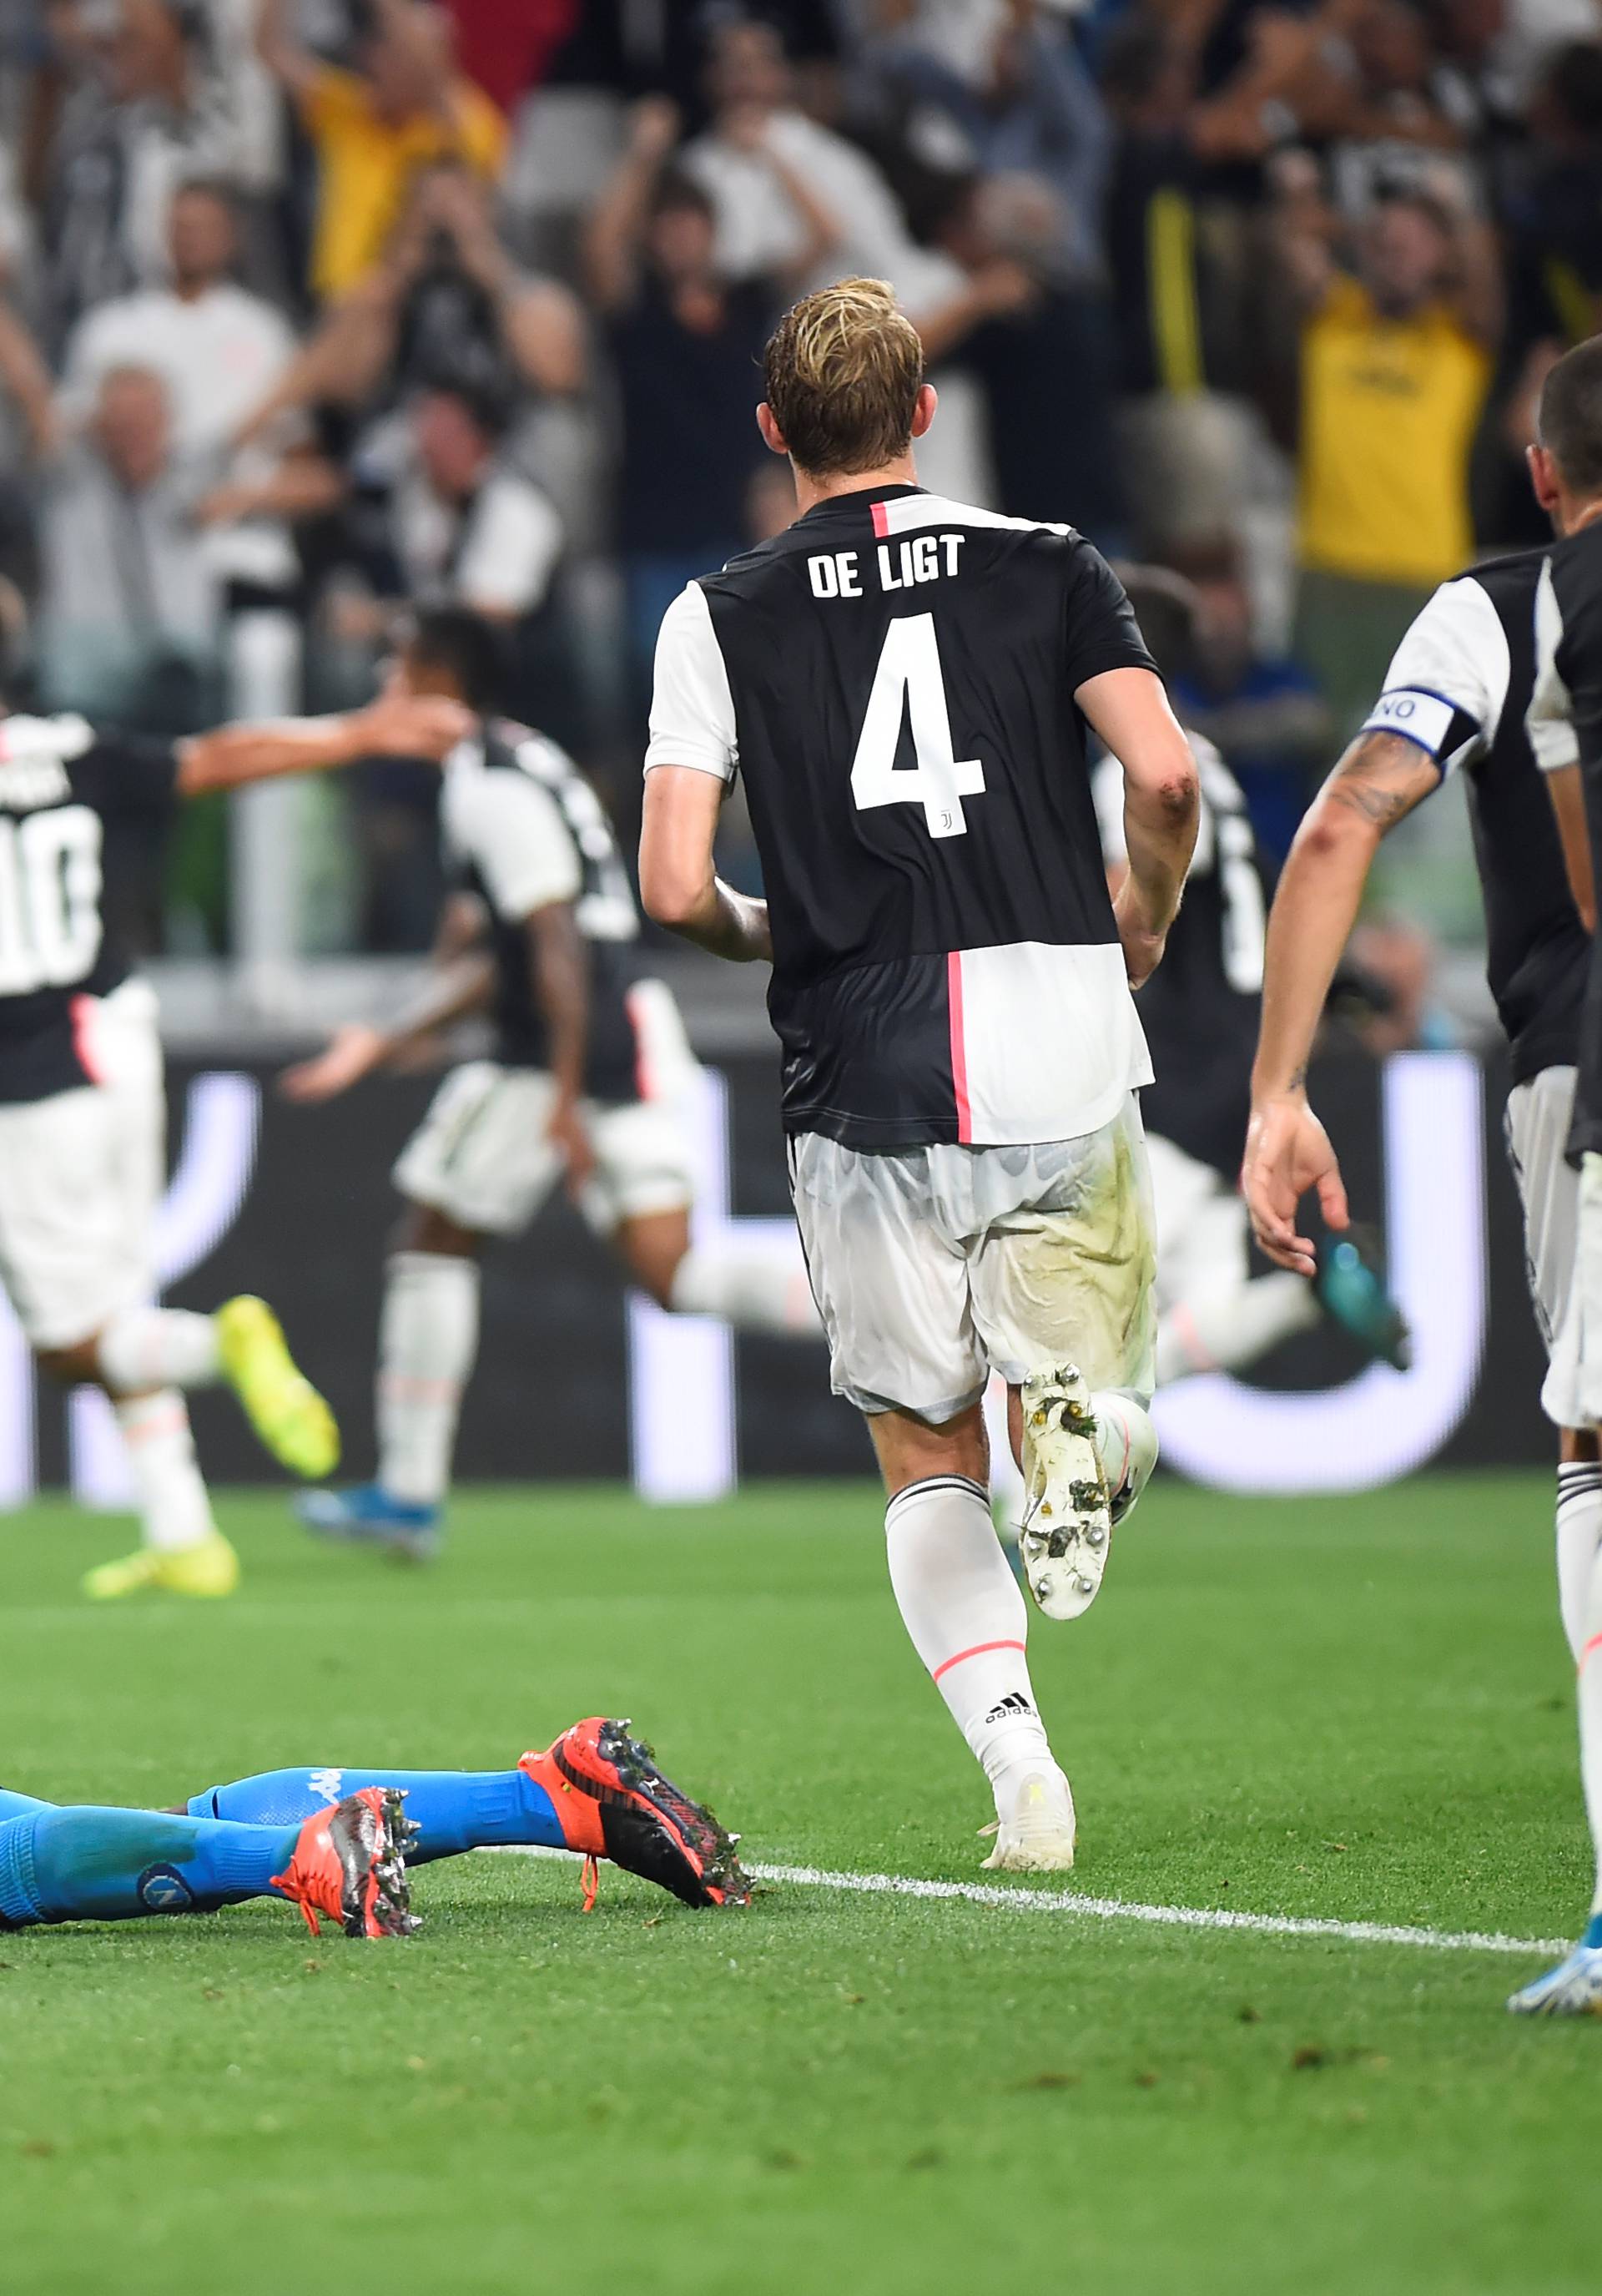 Juventus i Napoli zabili sedam komada, dvije asistencije Coste